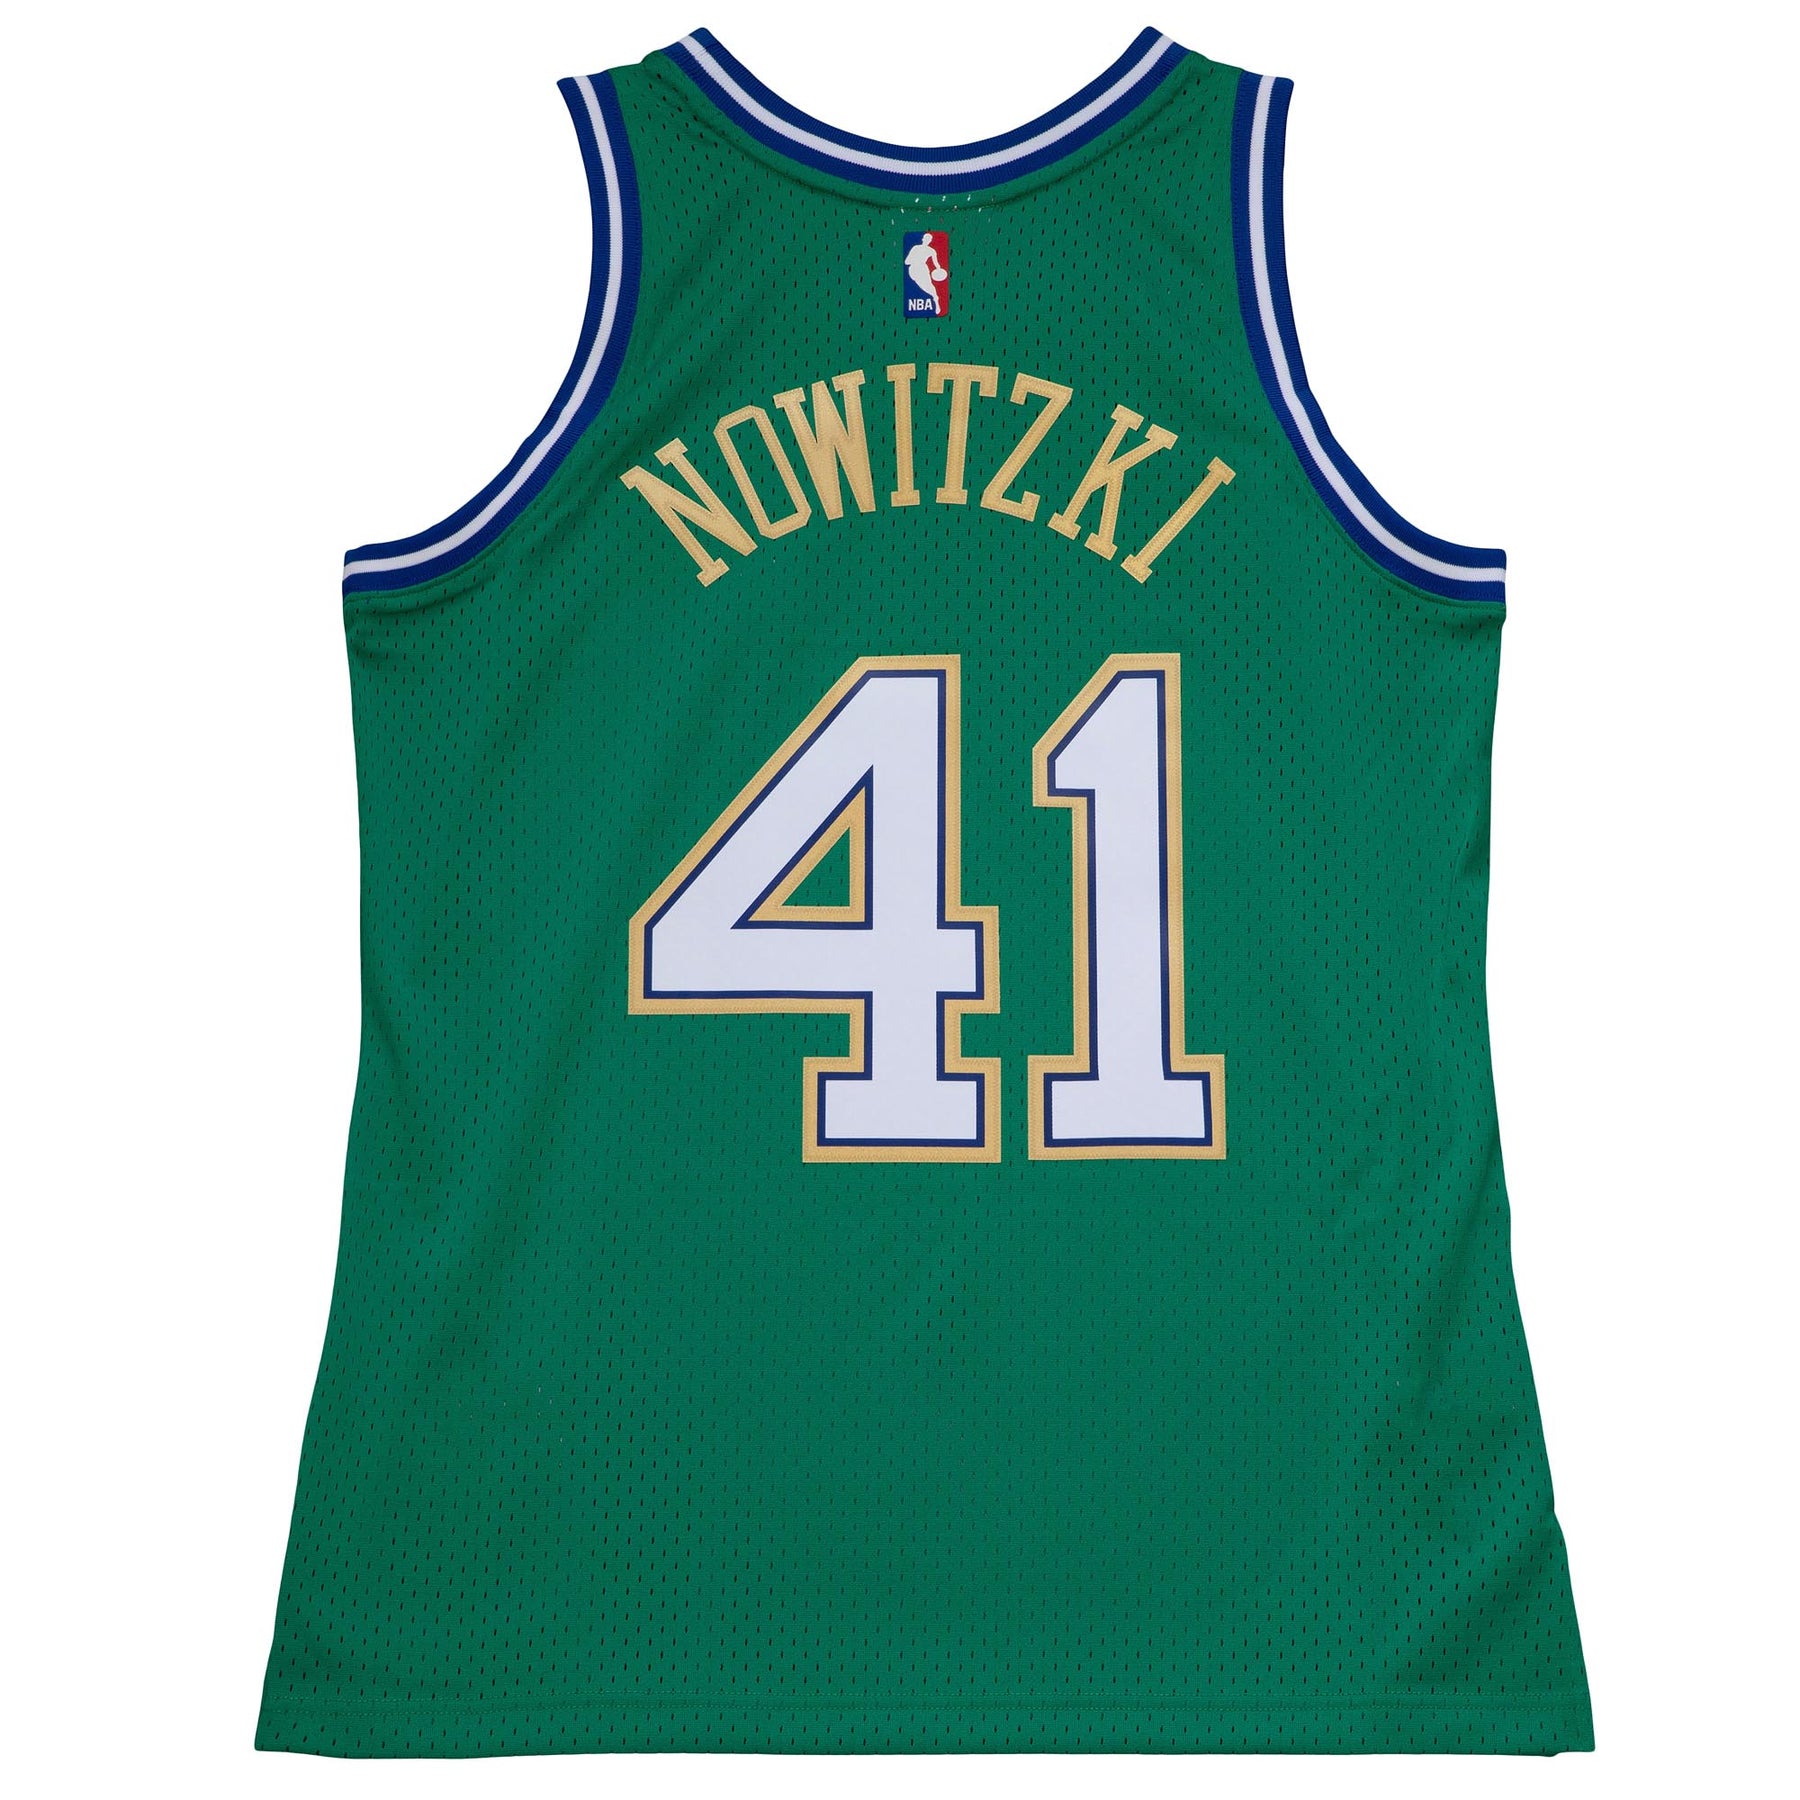 Green NBA Jerseys for sale